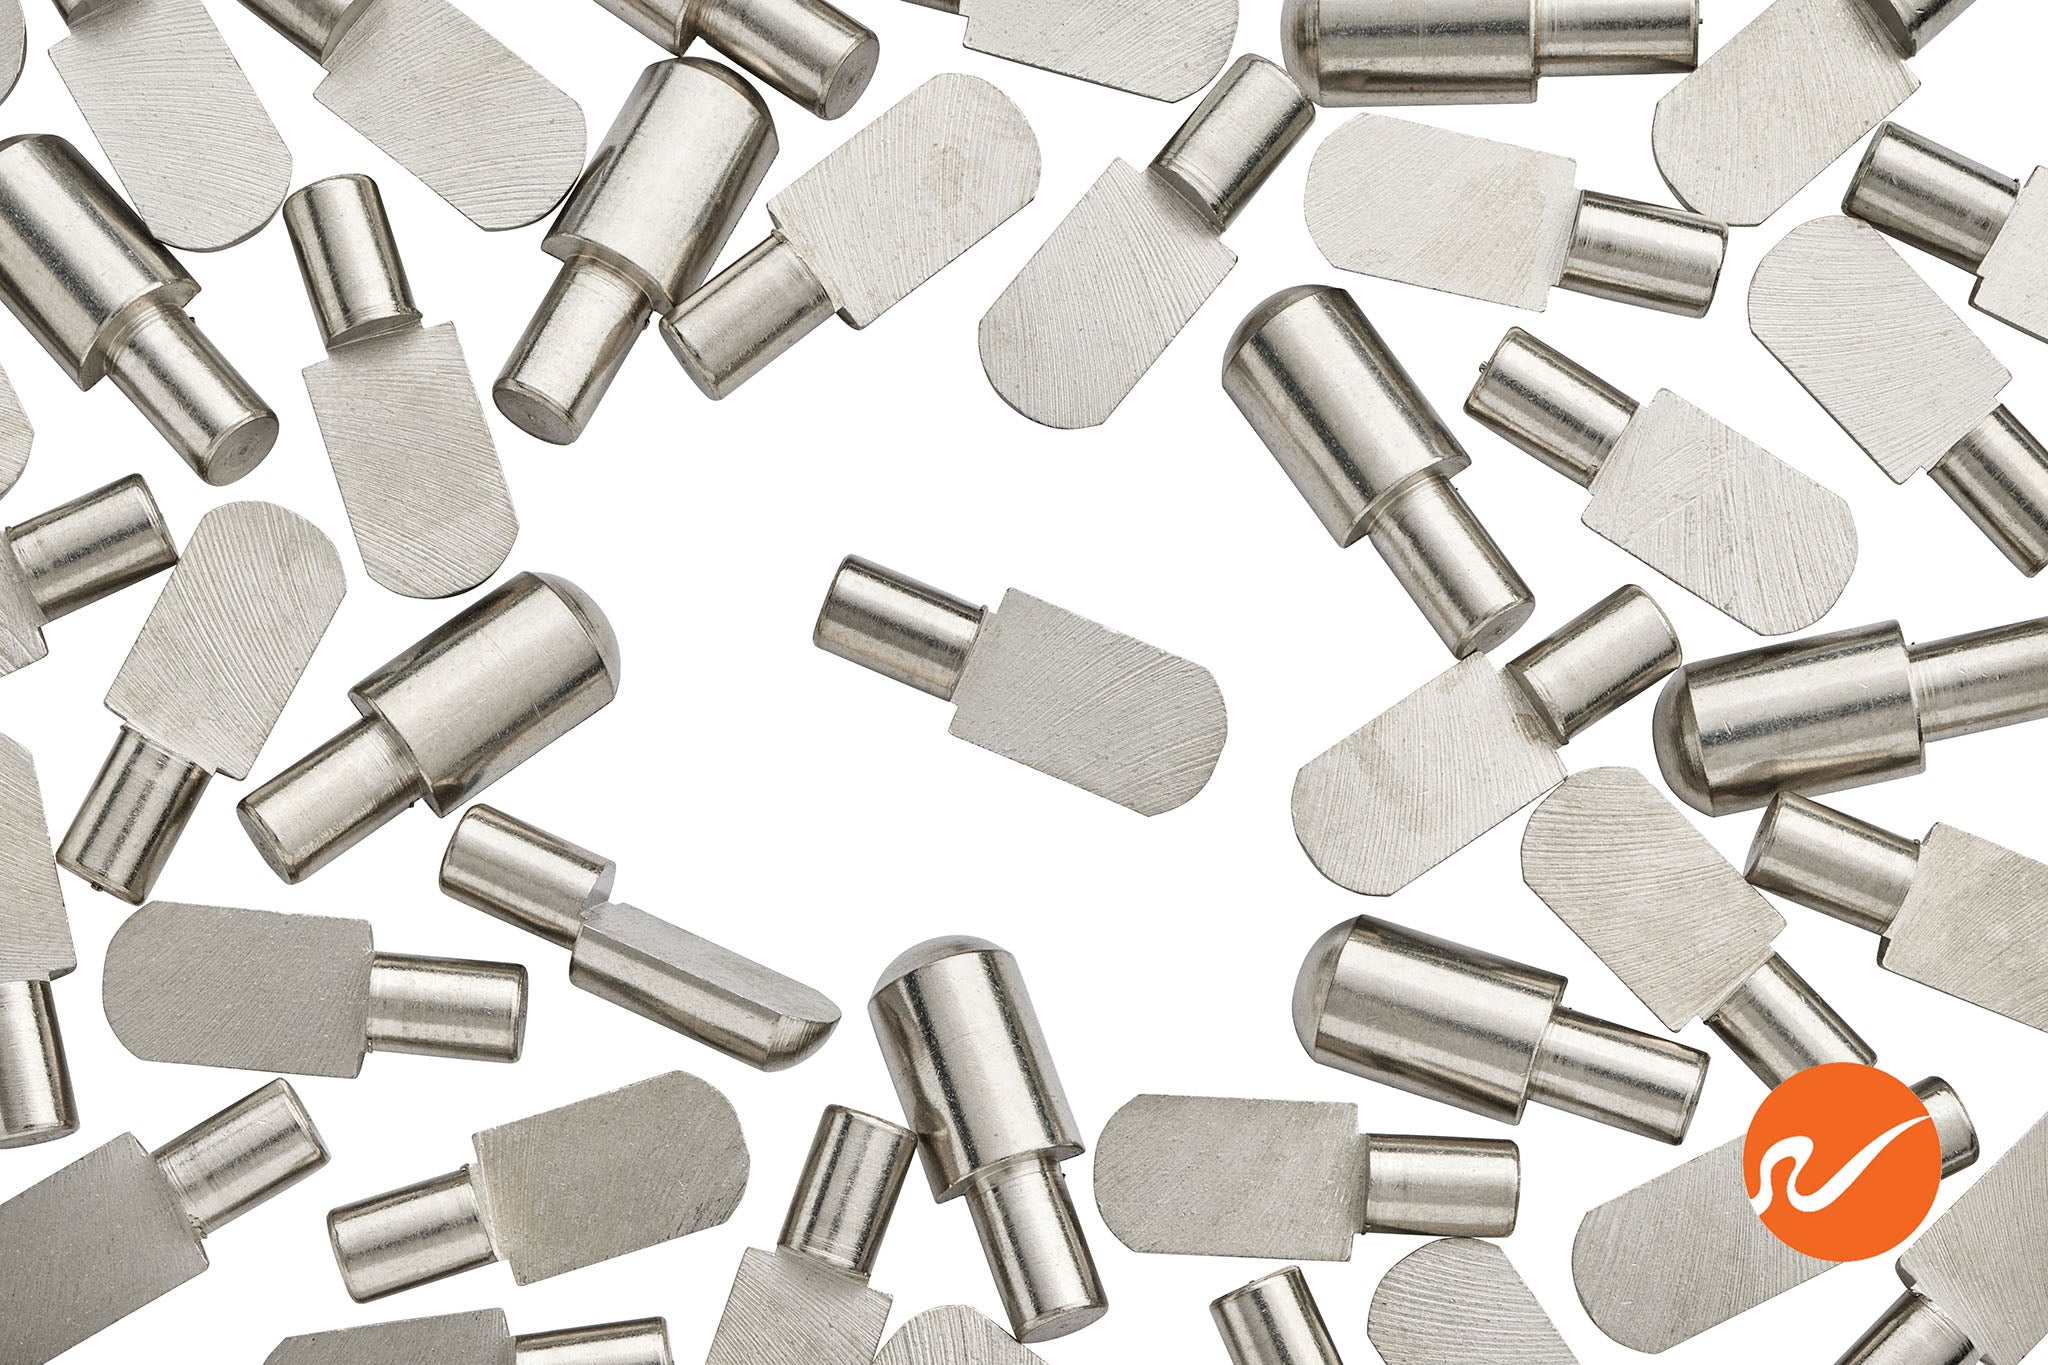 5mm Stainless Steel Shelf Pins - WidgetCo